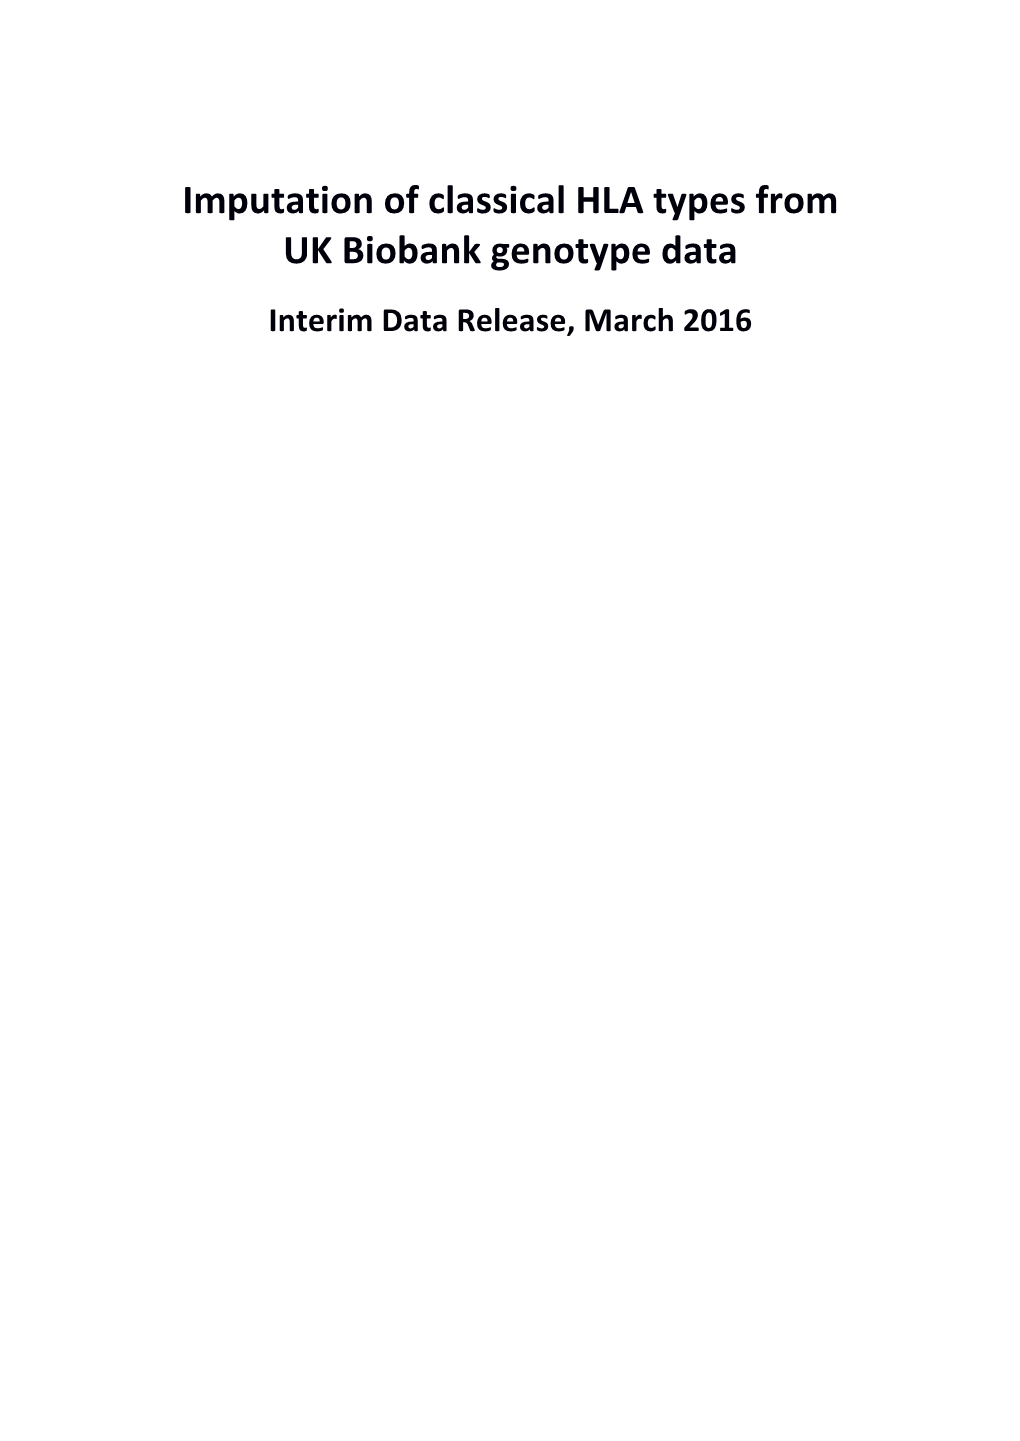 Imputation of Classical HLA Types from UK Biobank Genotype Data